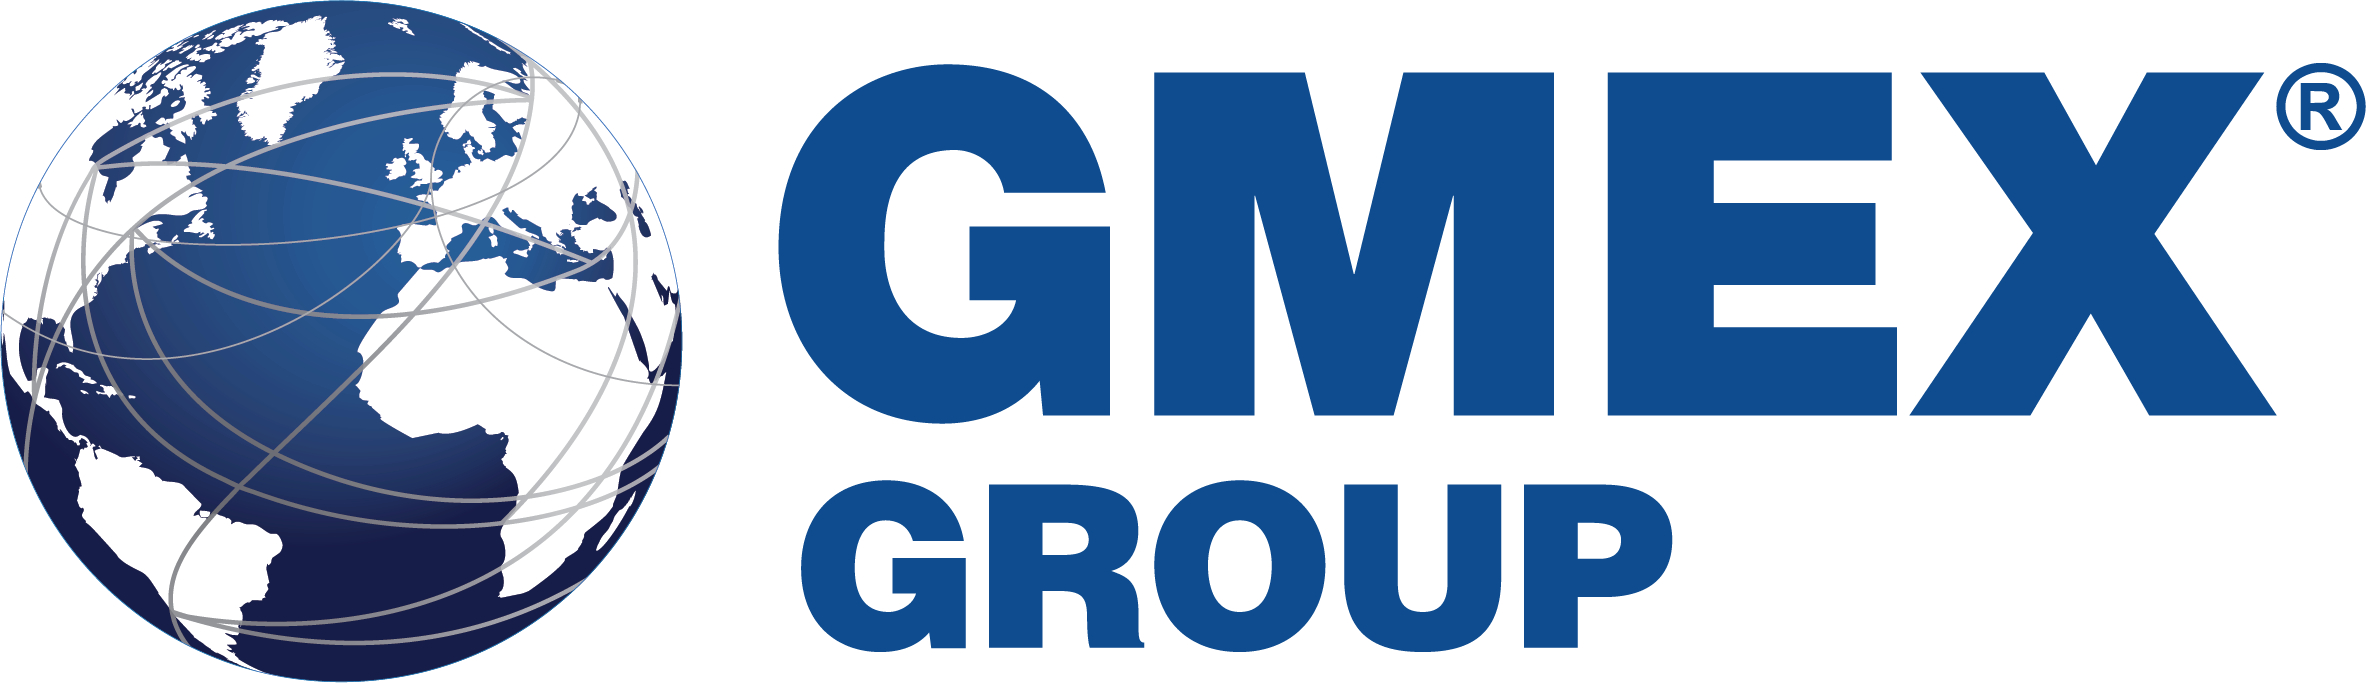 GMEX Group wins prestigious Fintech of the Year Award.